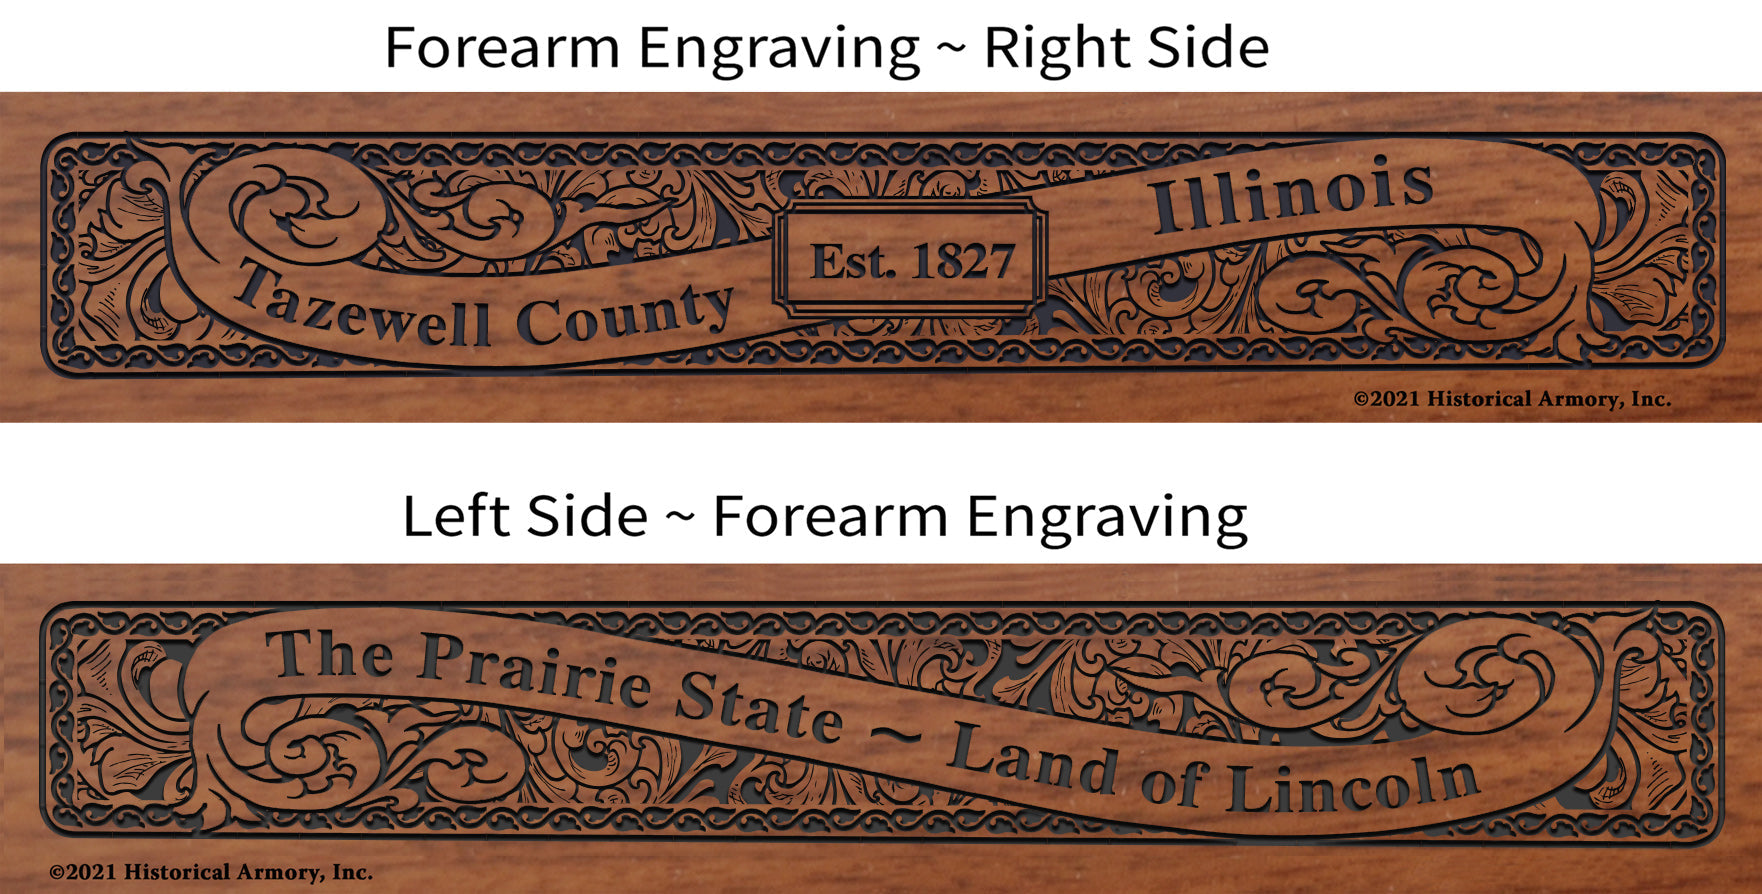 Tazewell County Illinois Establishment and Motto History Engraved Rifle Forearm